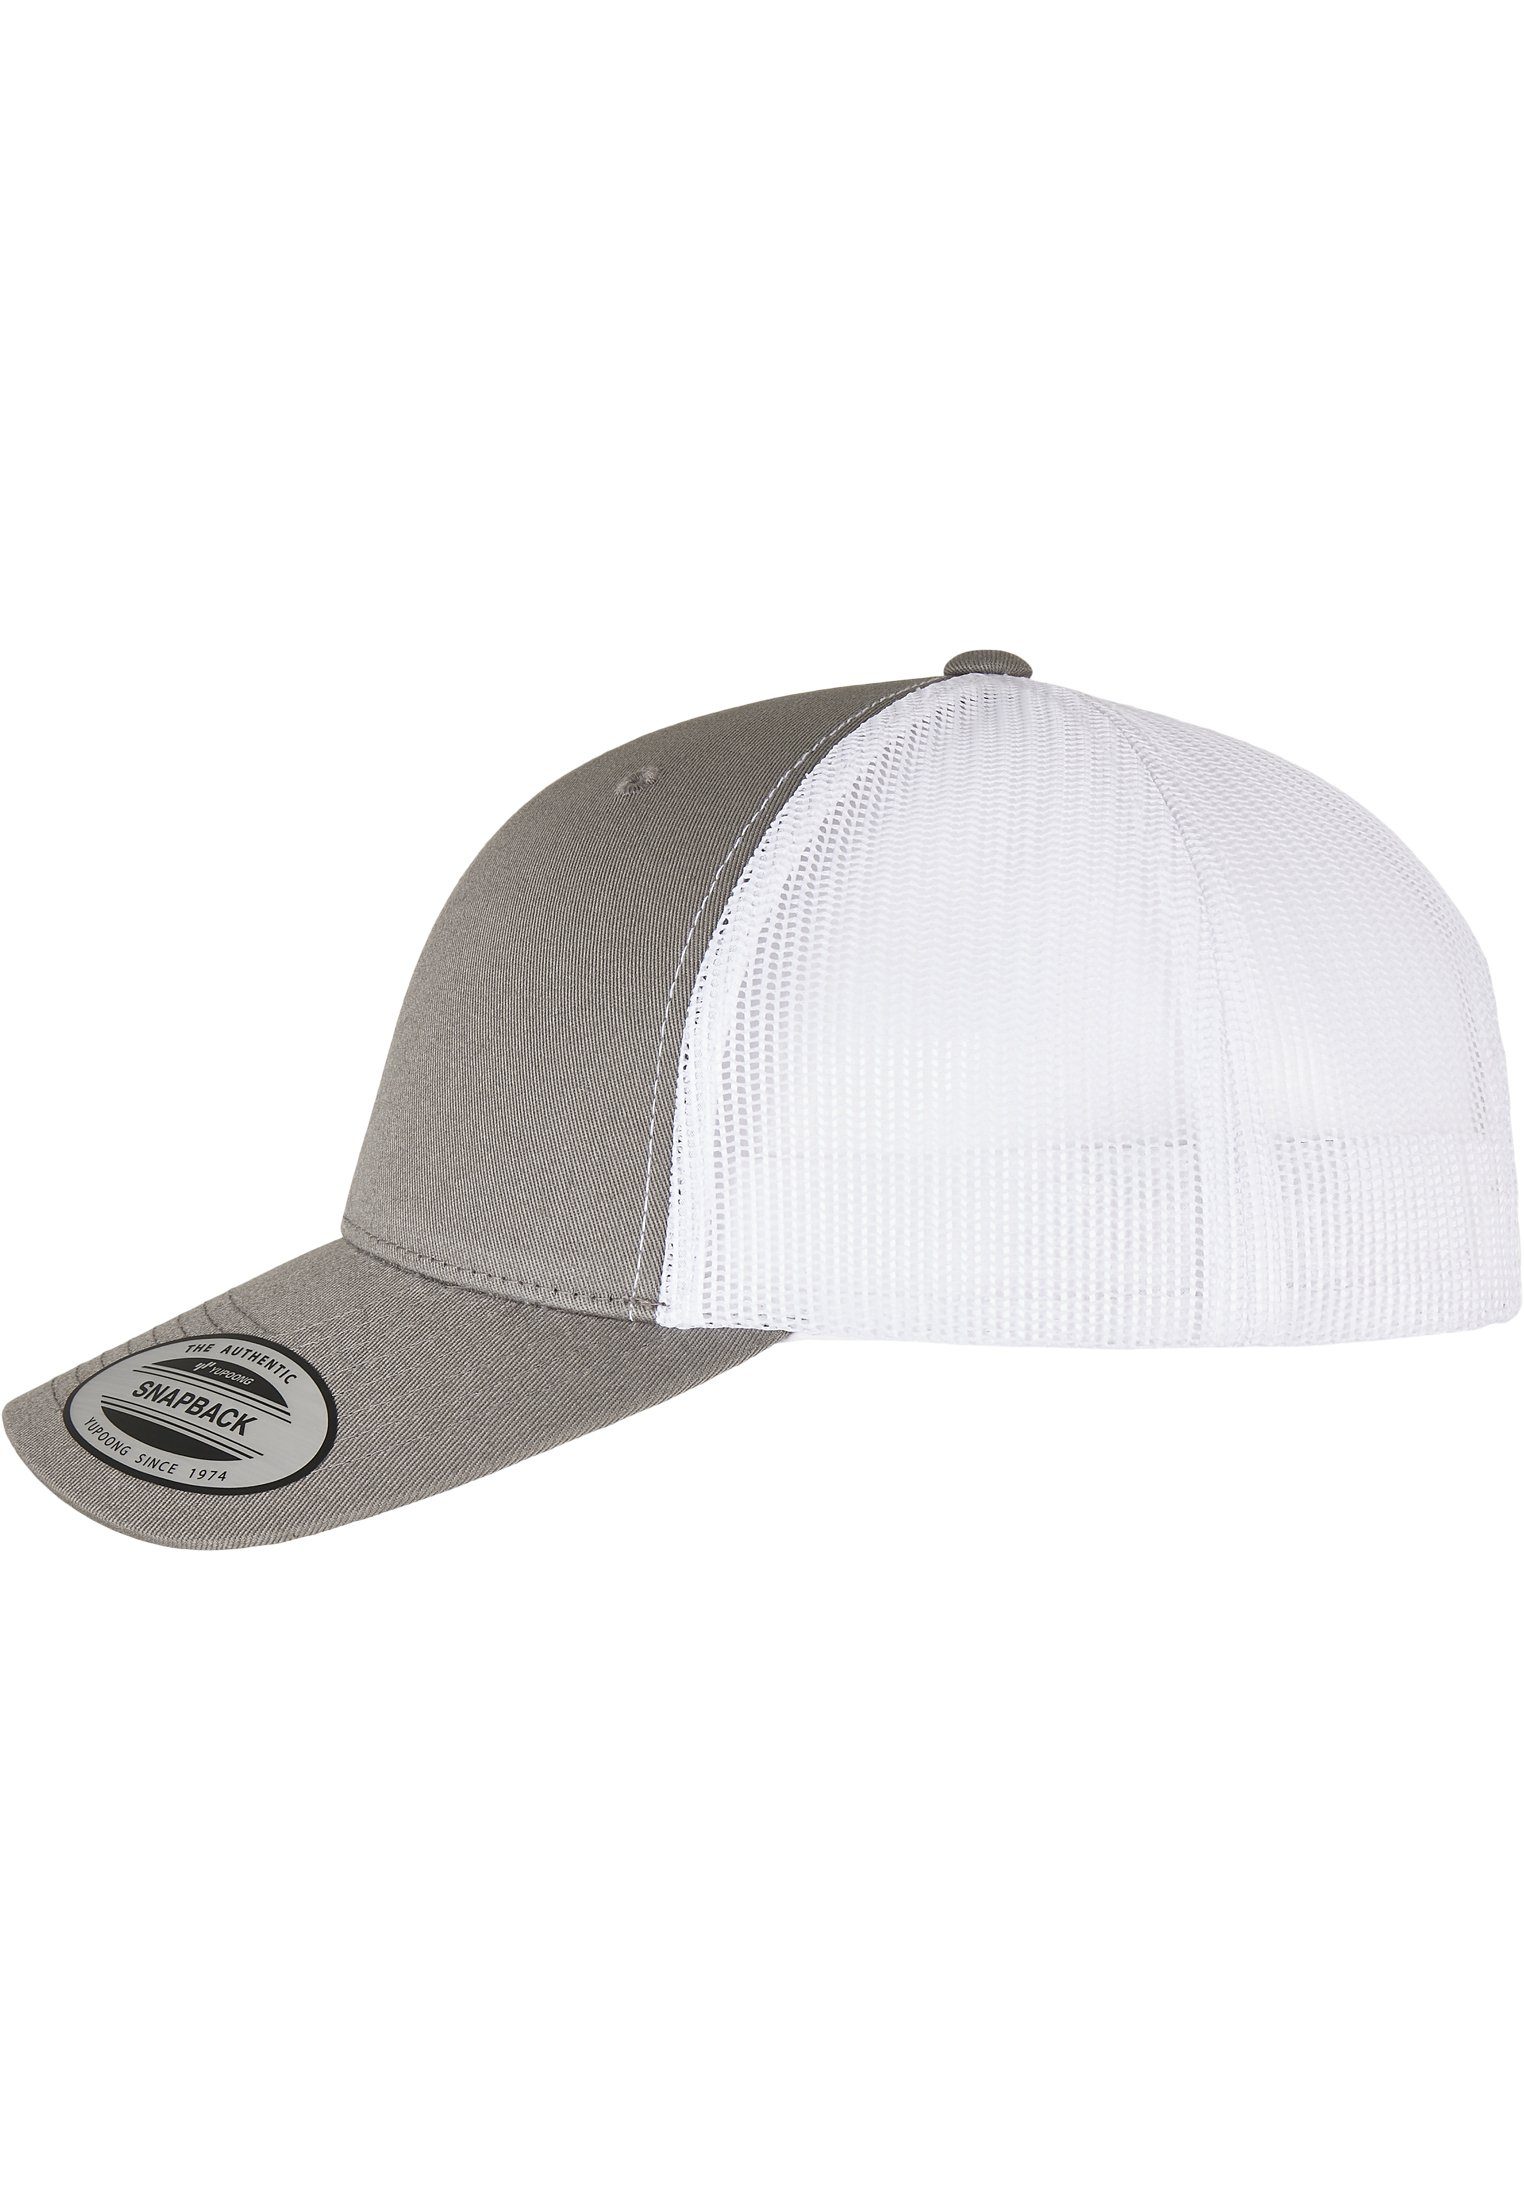 YP CLASSICS 2-TONE Flex CAP RETRO Caps Flexfit grey/white TRUCKER RECYCLED Cap